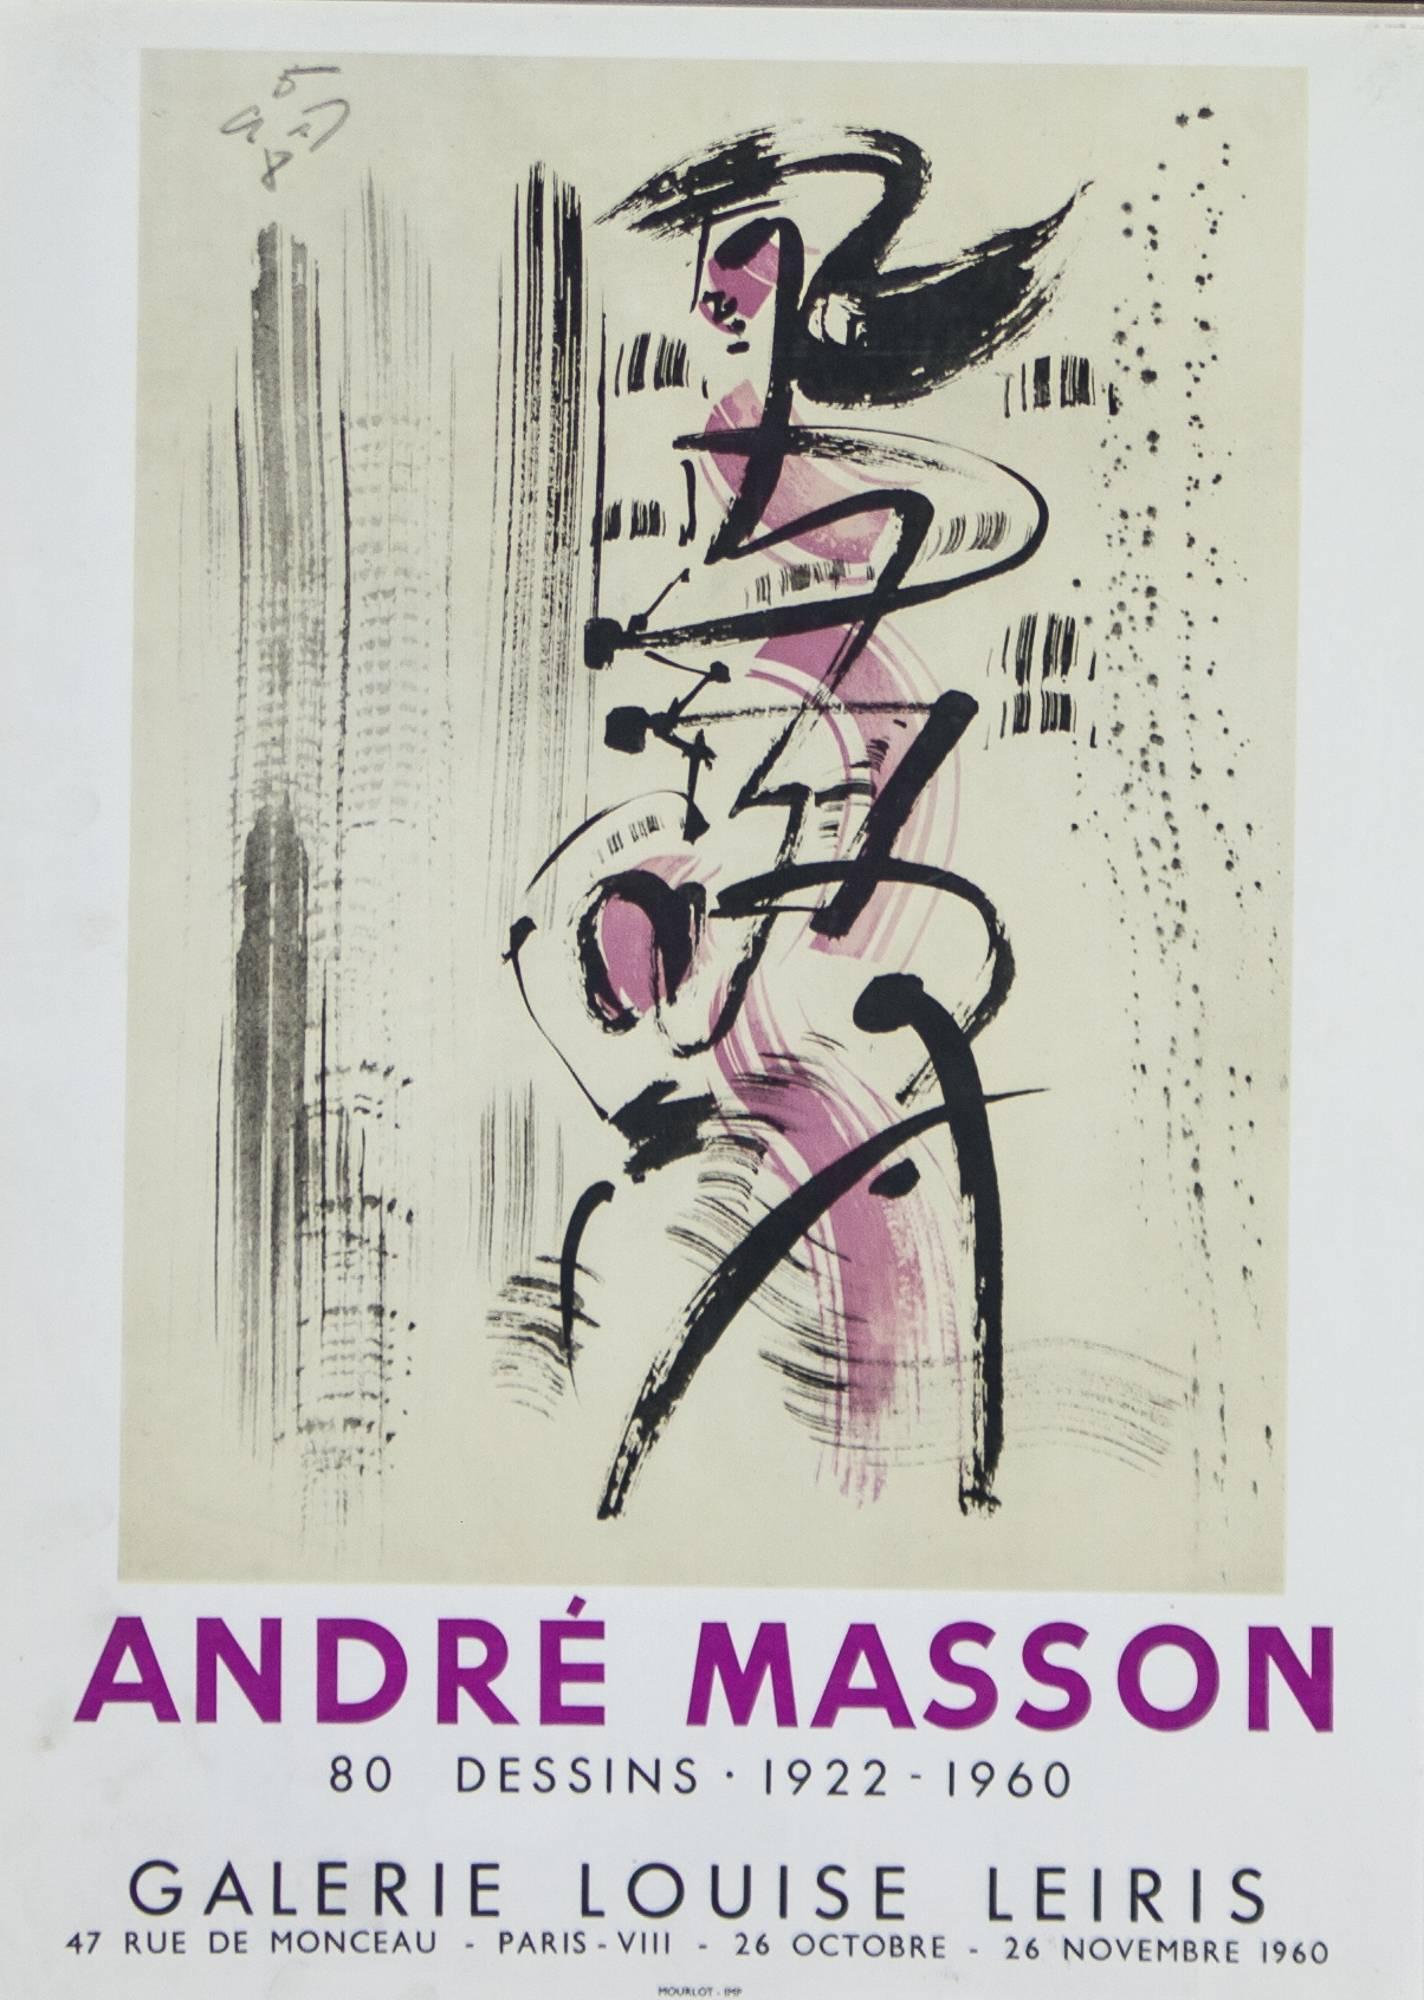 Andre Masson 80 Dessins 1922-1960 Galerie Louise Leiris, Paris